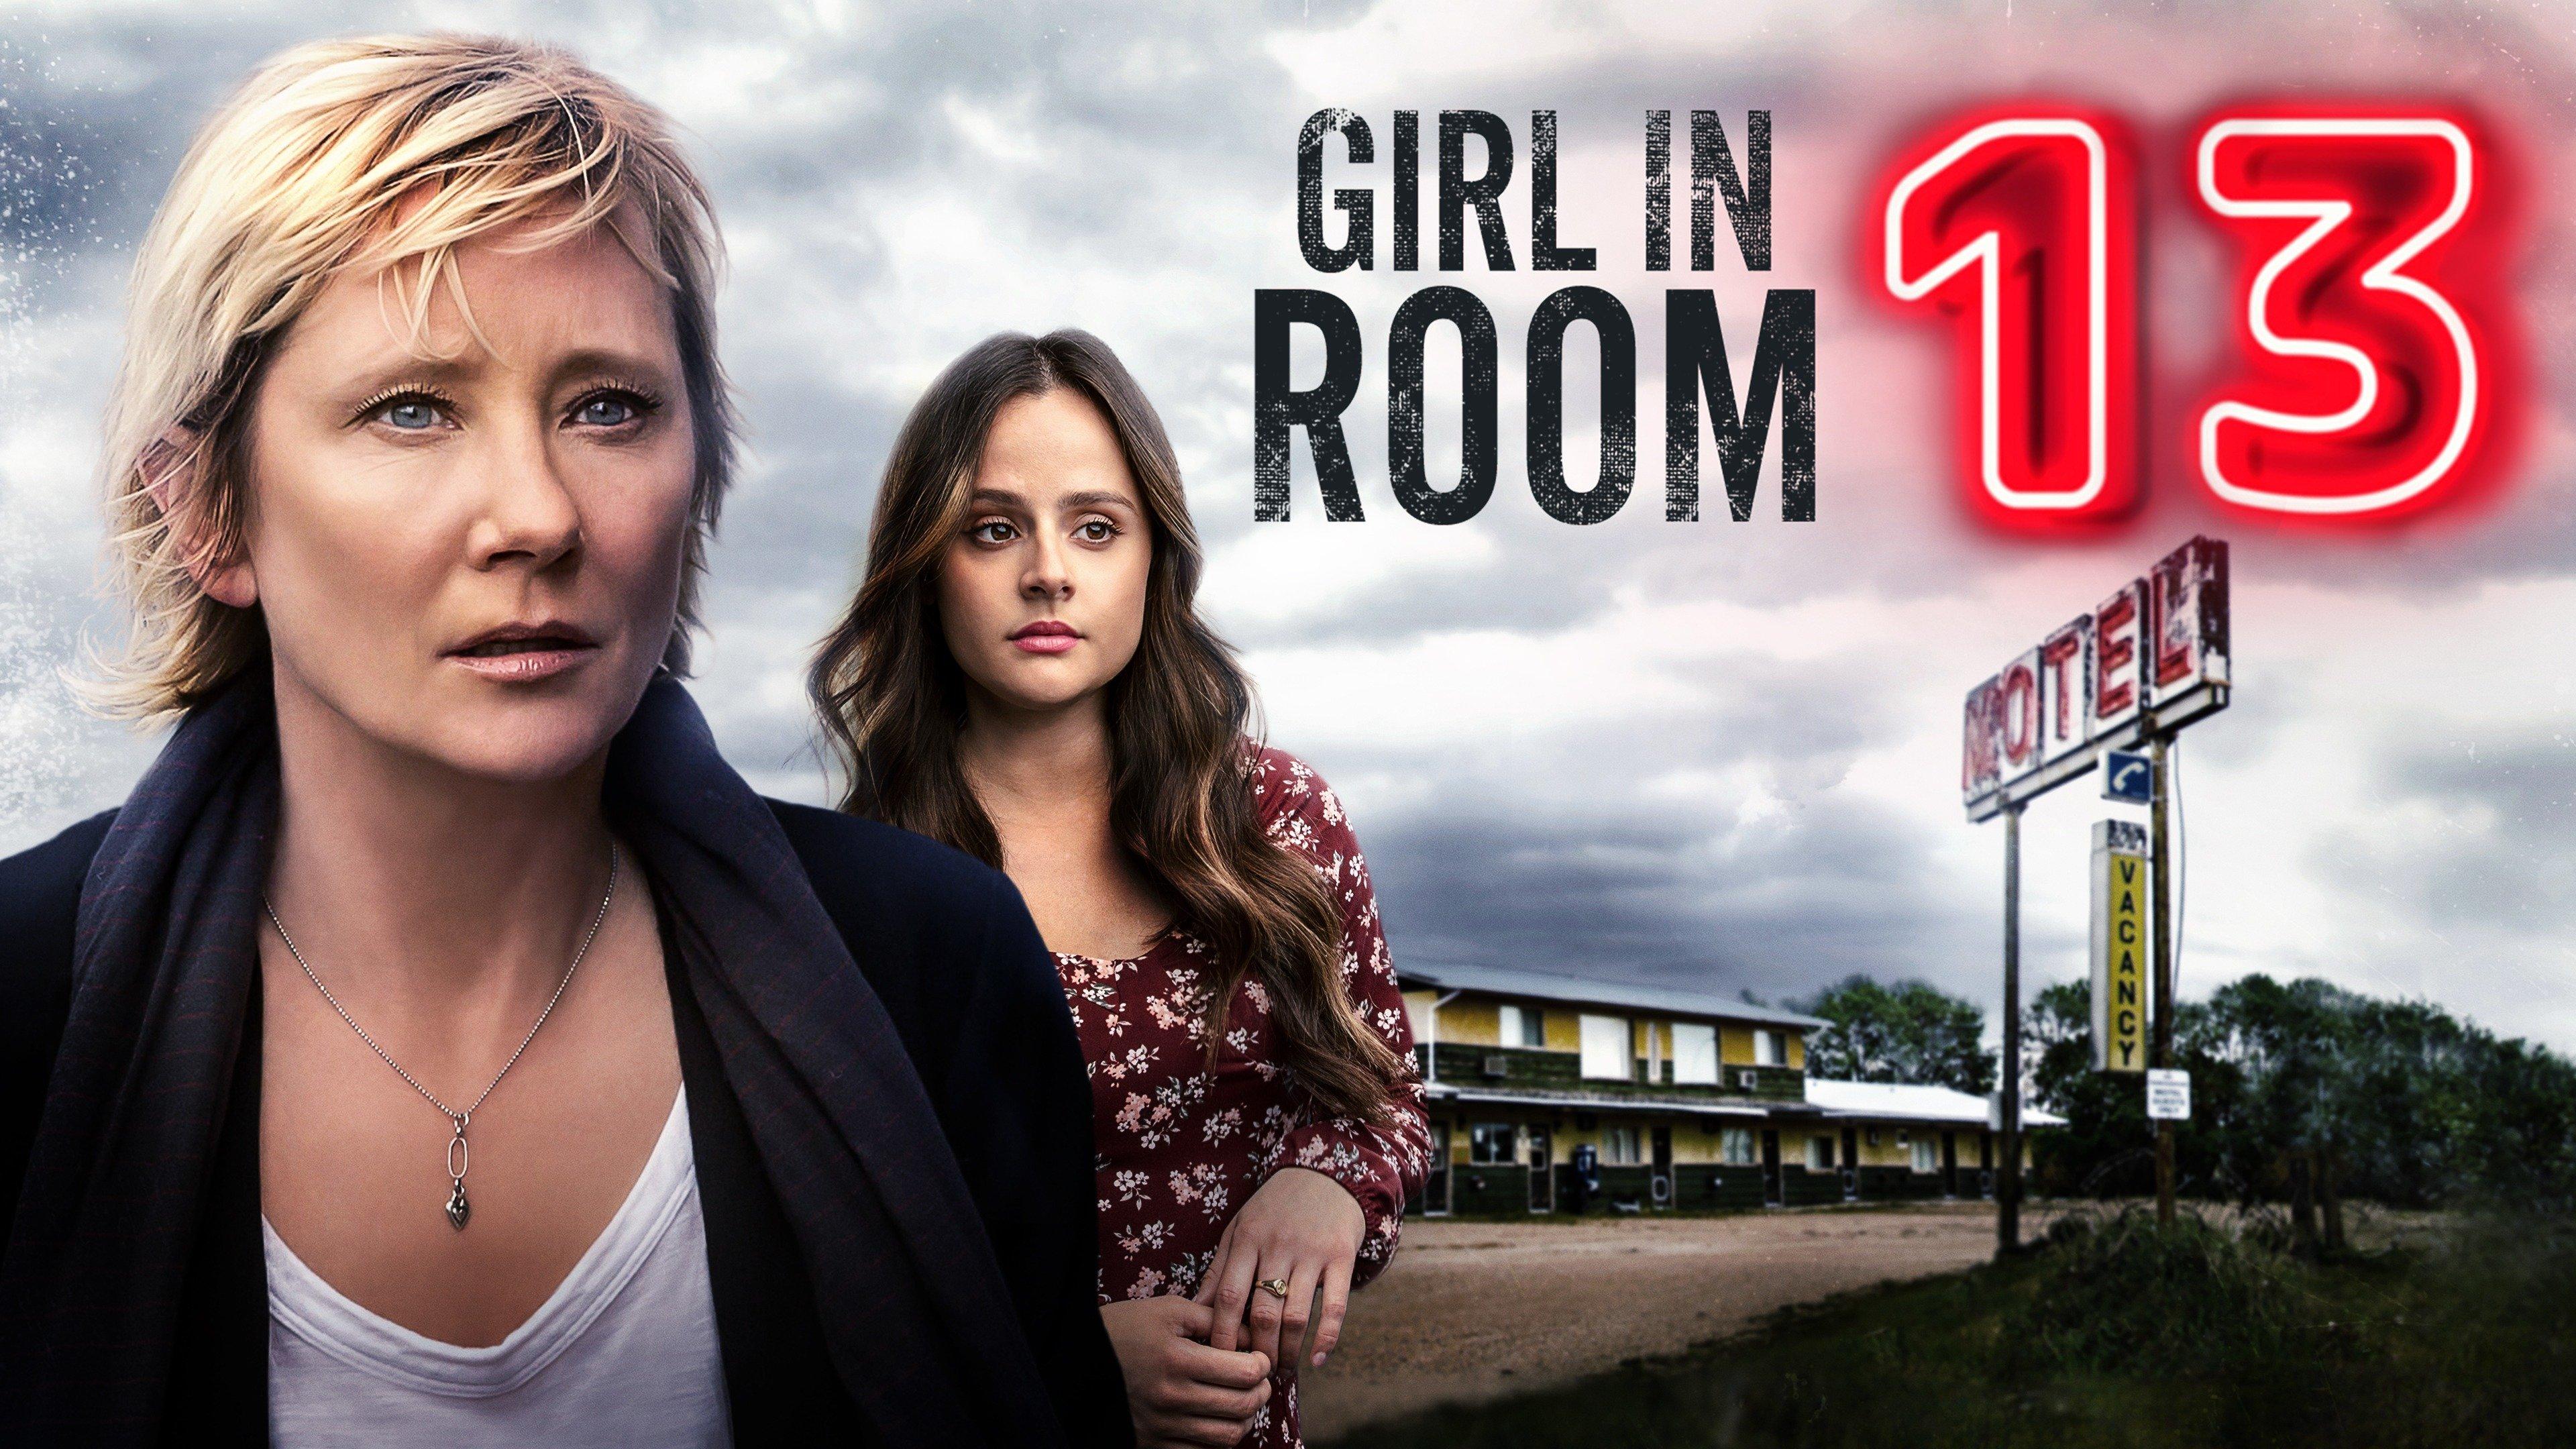 Girl in Room 13 - Watch Streaming Online | Philo